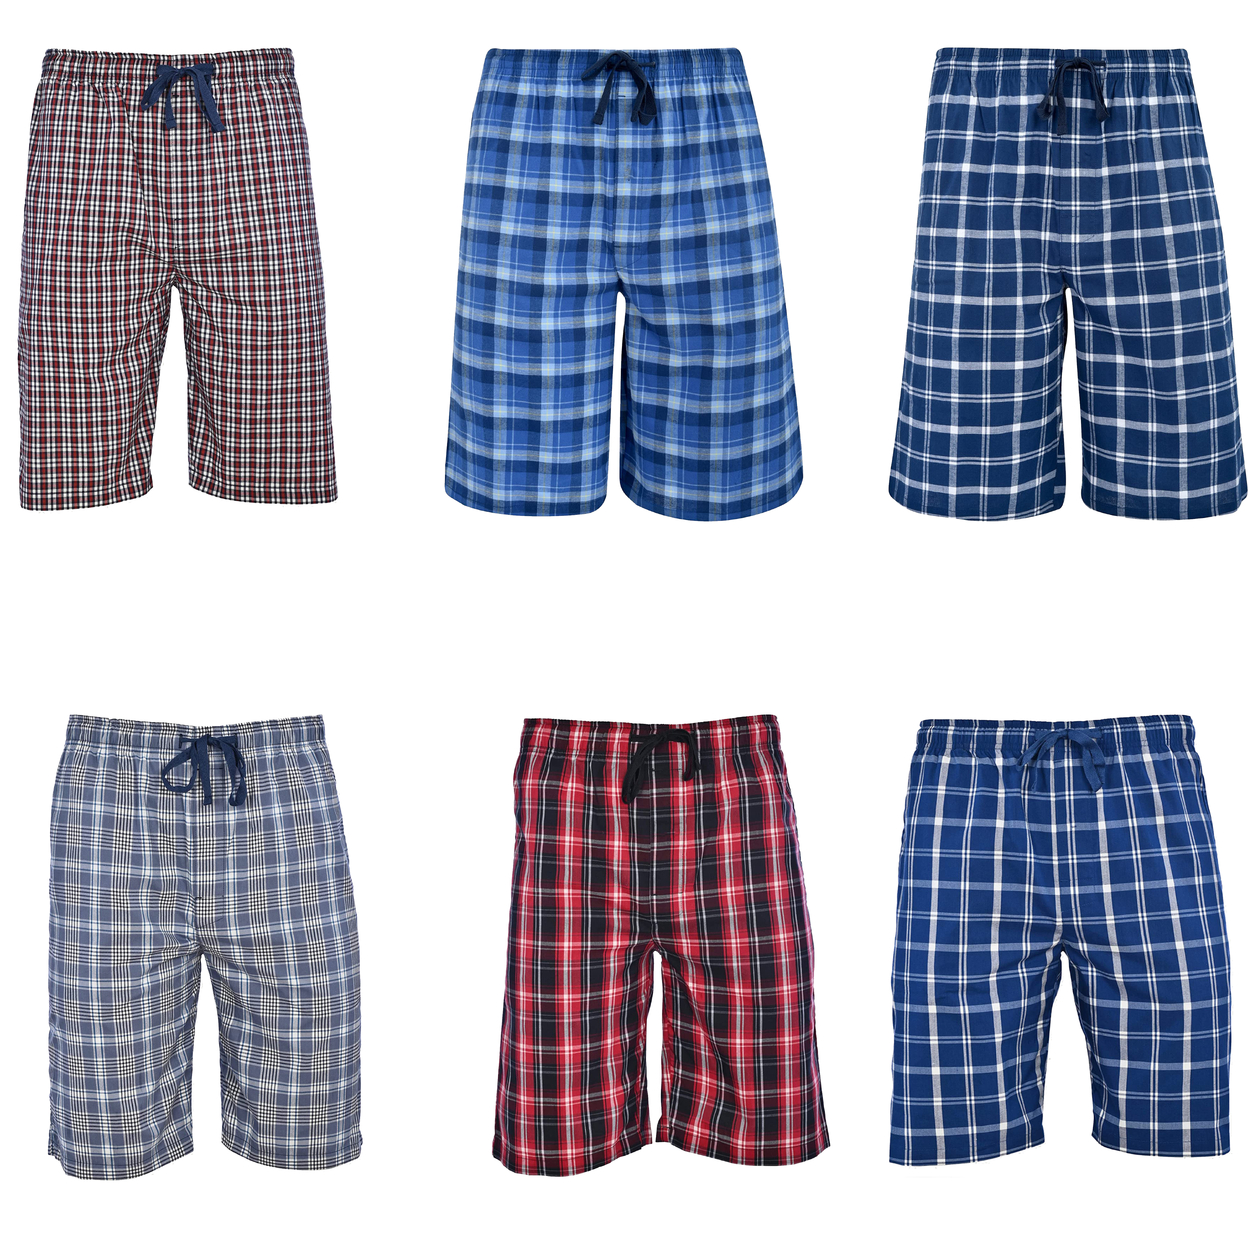 2-Pack: Men's Ultra Soft Plaid Lounge Pajama Sleep Wear Shorts - Tan & Tan, Medium